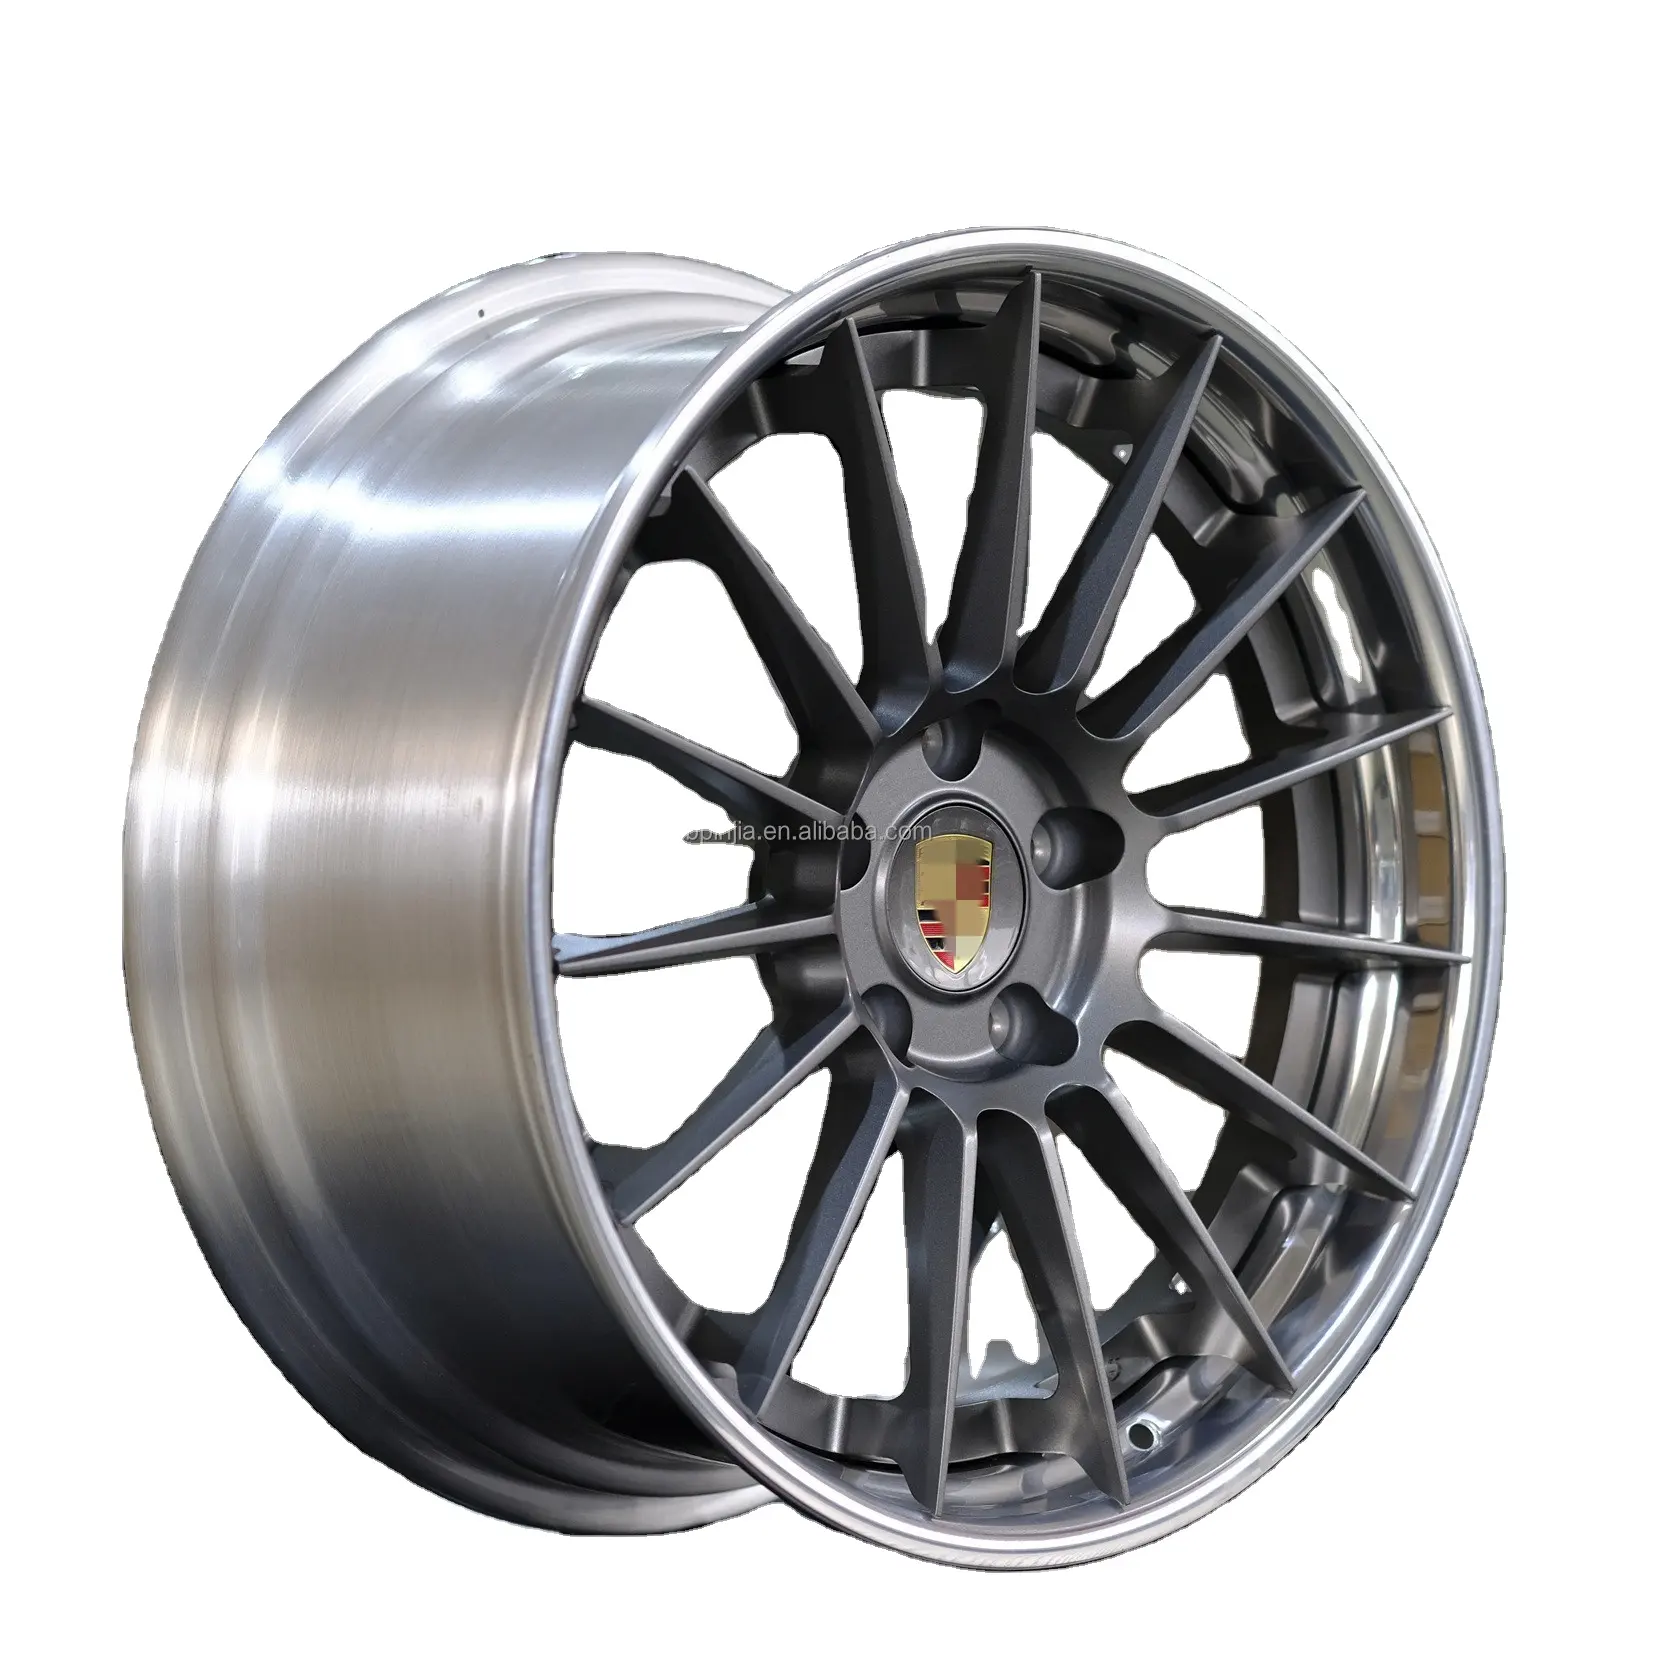 Wheel Rims Aluminium Alloy Black Silver OEM Customized Chrome Material Nissan rims forged wheel for mercedes